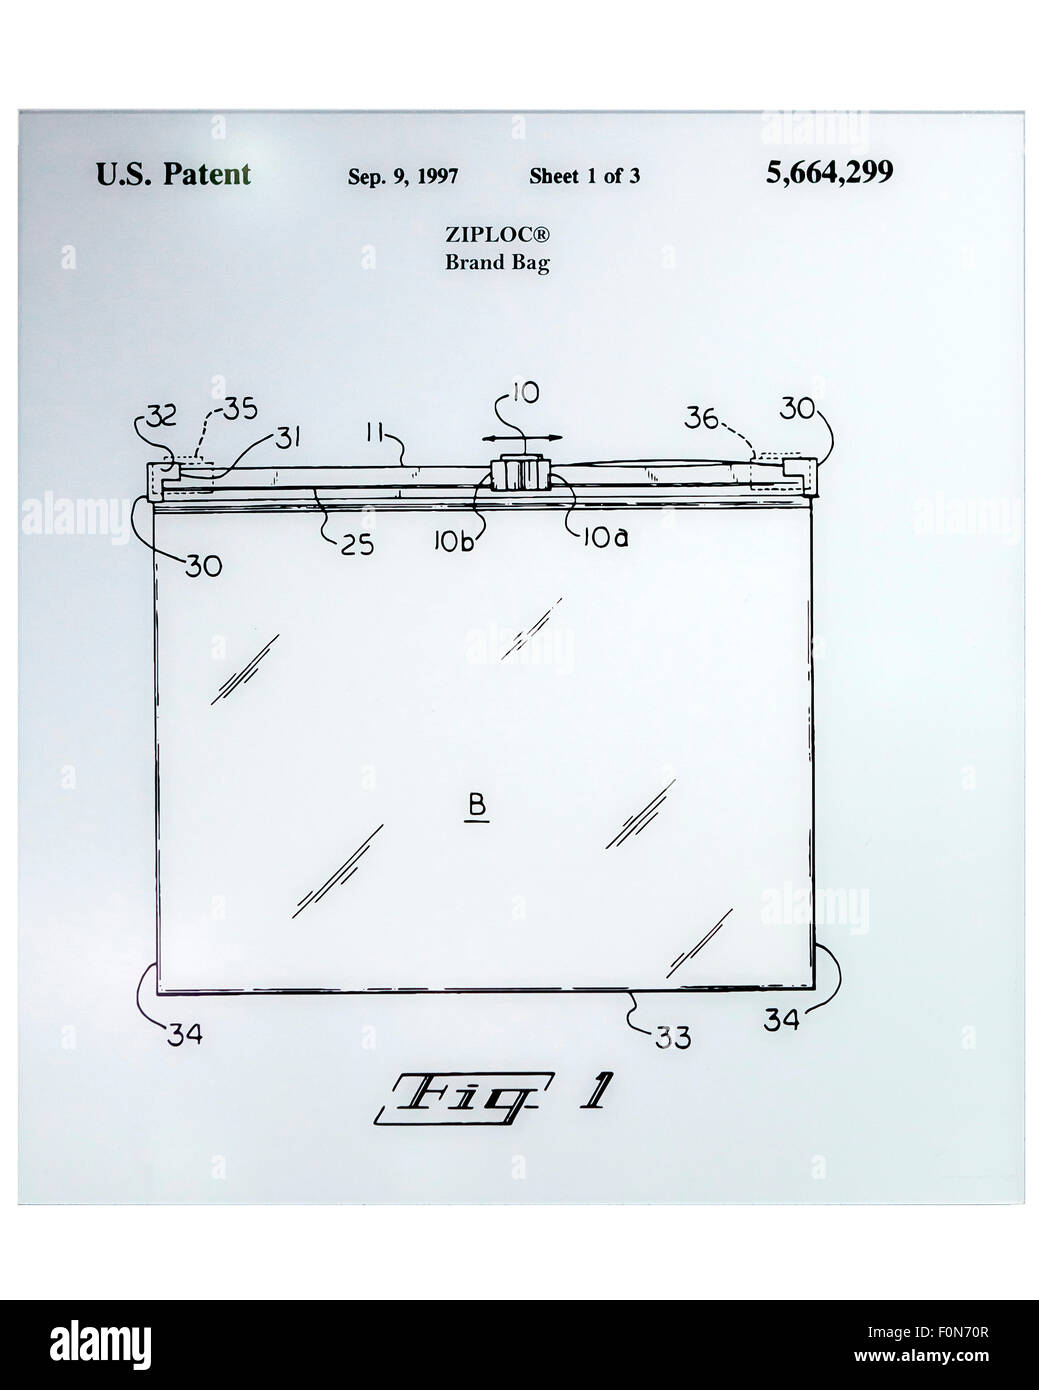 https://c8.alamy.com/comp/F0N70R/original-ziploc-sandwich-bag-us-patent-image-circa-1997-us-patent-F0N70R.jpg